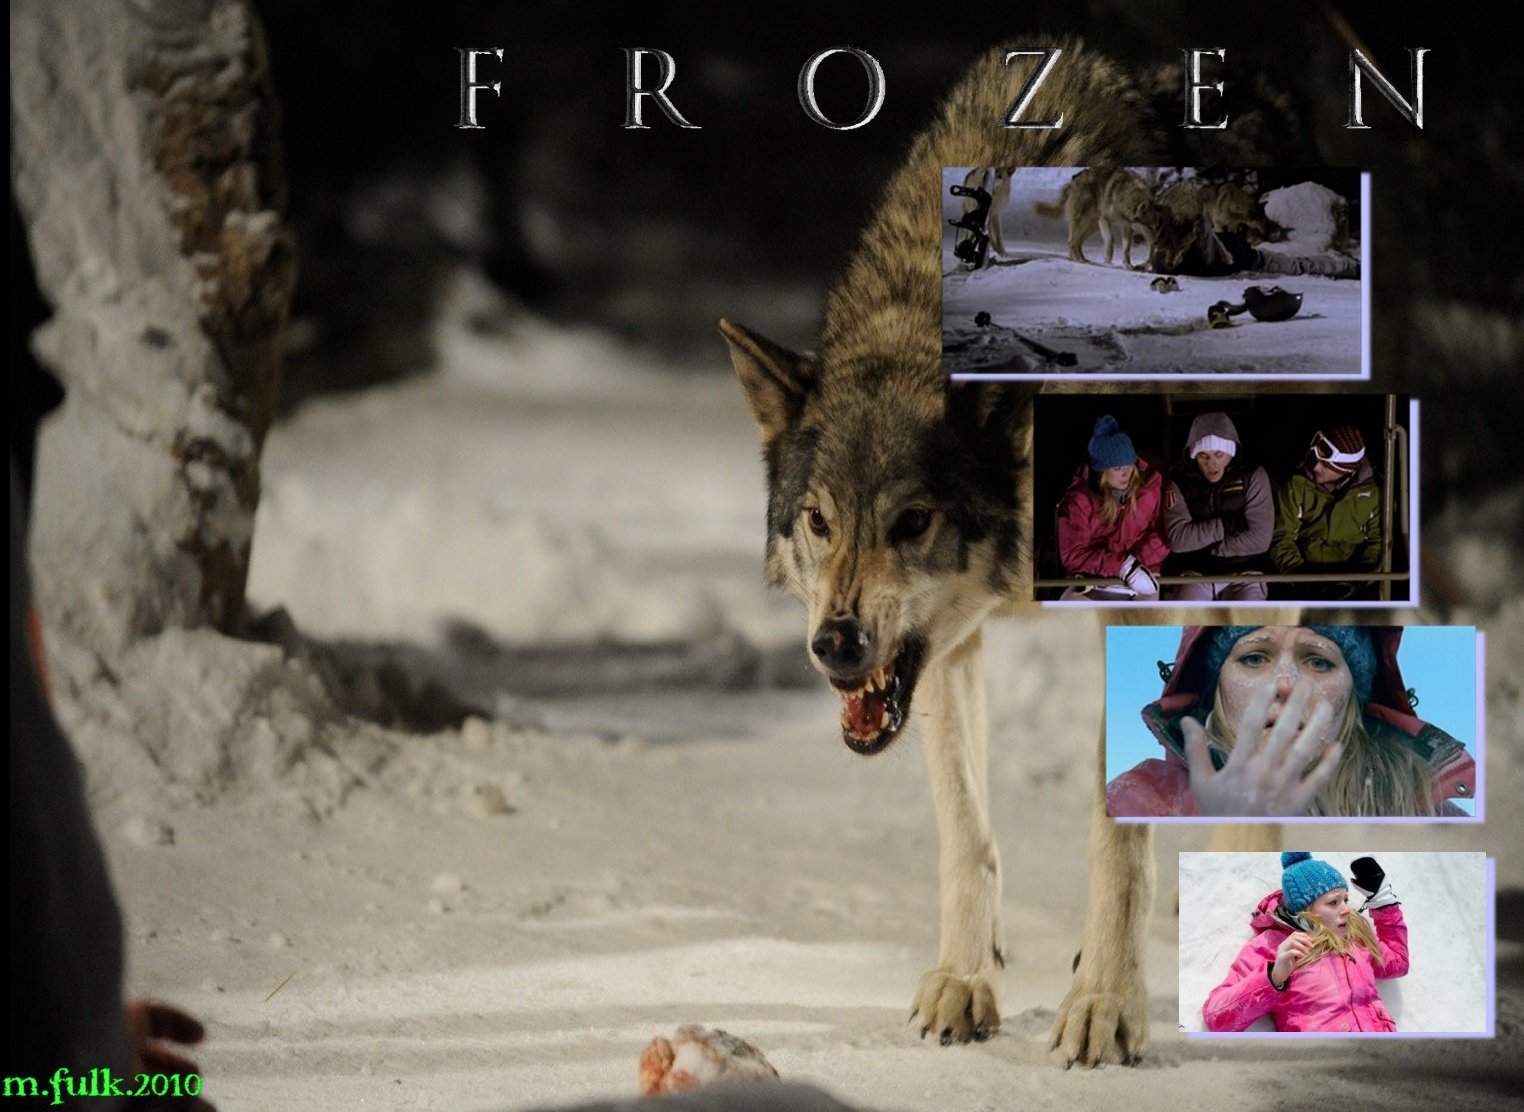 Frozen (2010) Backgrounds on Wallpapers Vista